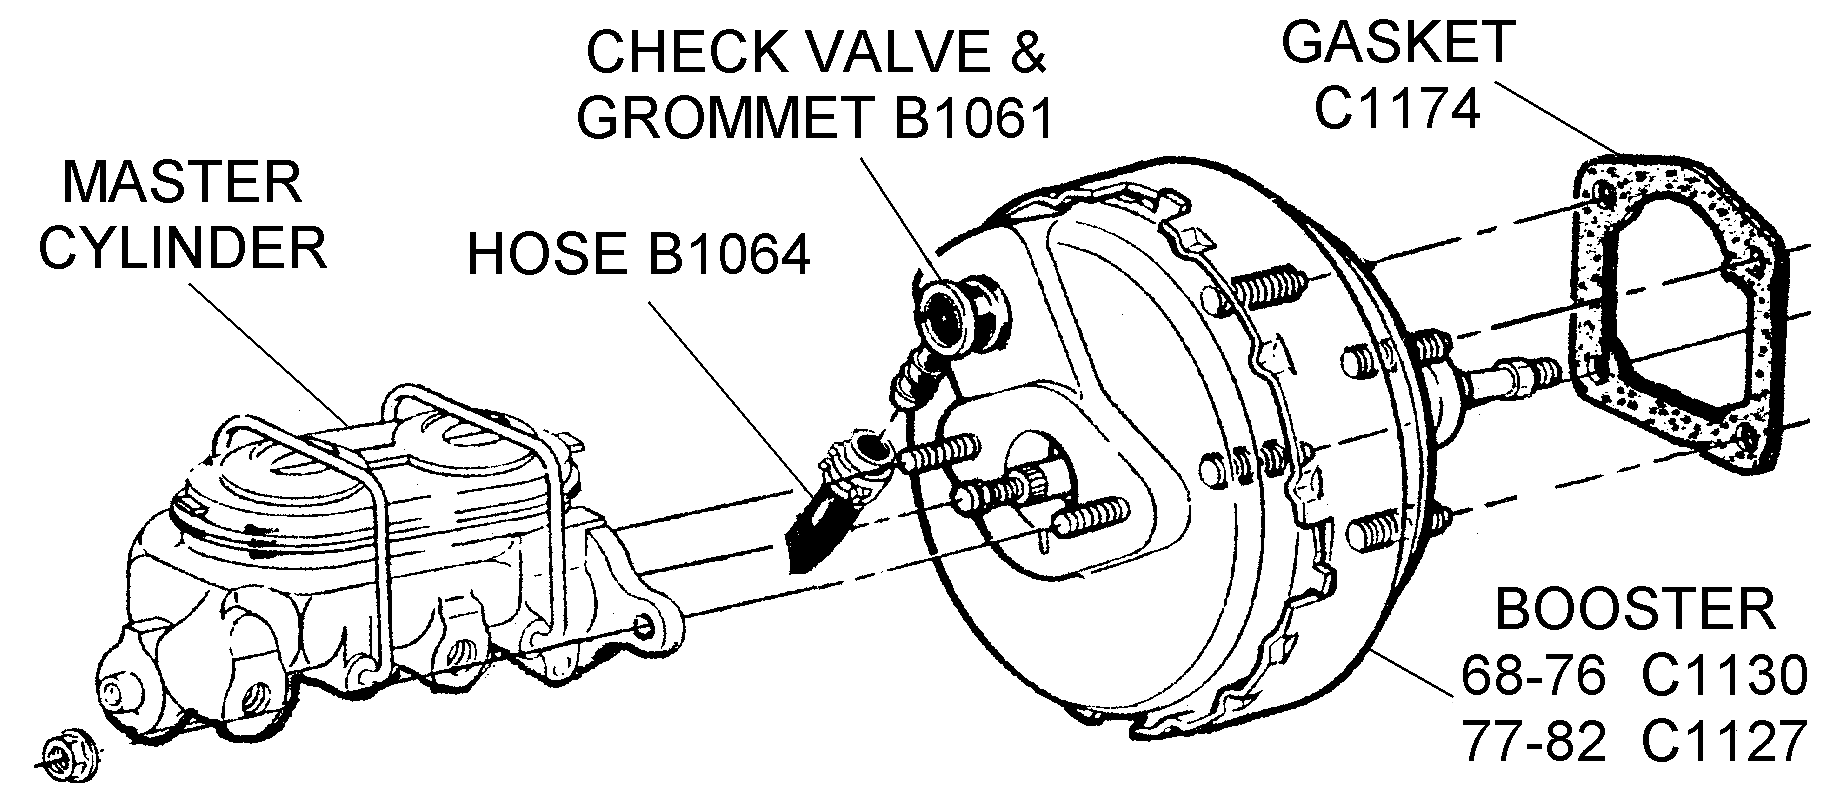 Master Cylinder - Diagram View - Chicago Corvette Supply